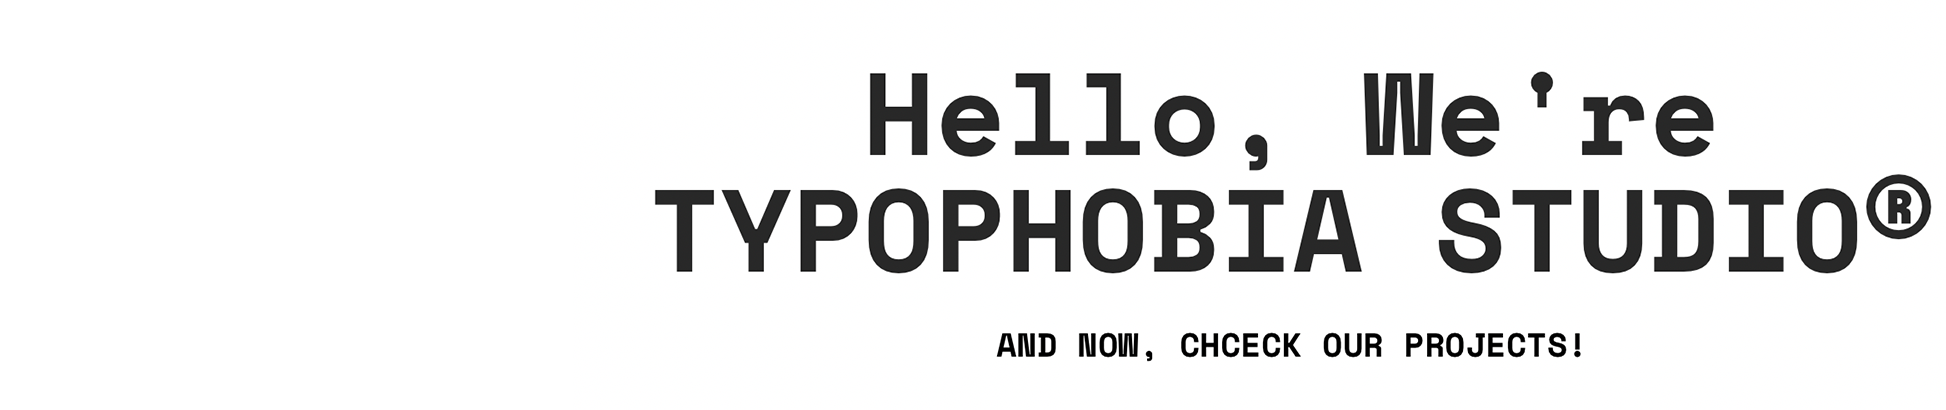 Typo Phobia's profile banner